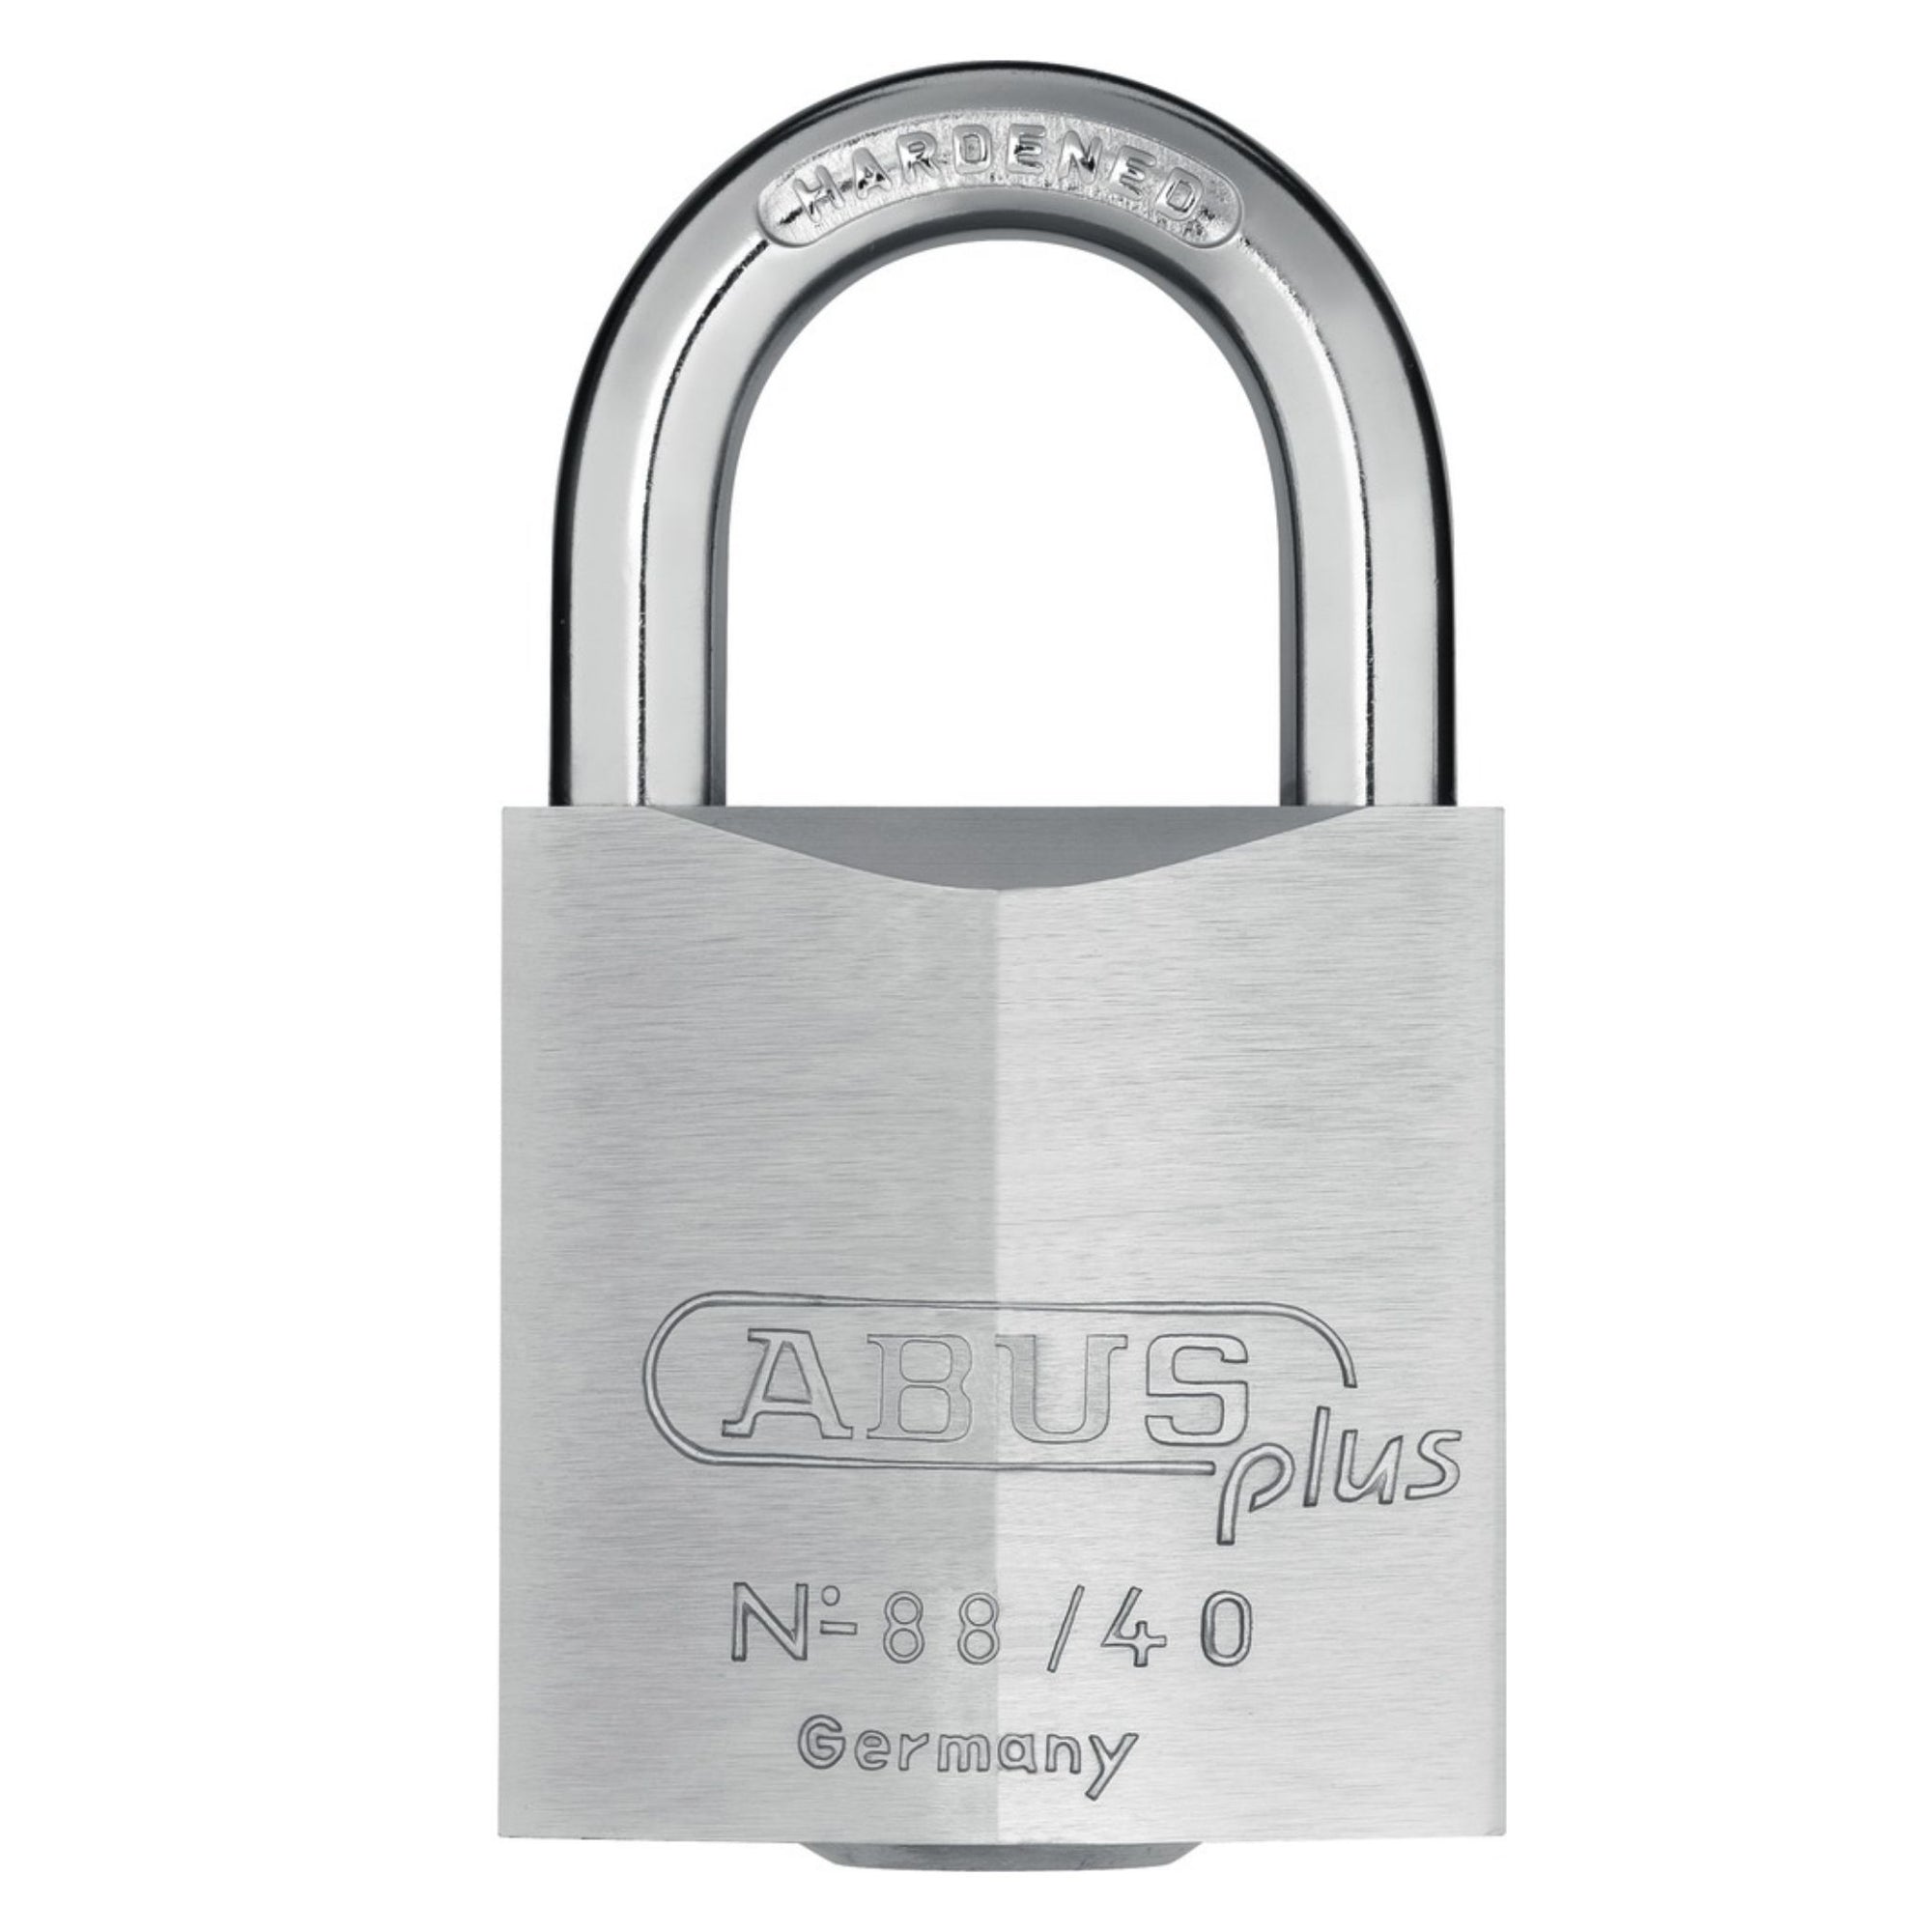 Abus 88/40 KA 1216654 Solid Chrome Plated Brass Locks Keyed Alike to Match Existing Key Number KA1216654 - The Lock Source